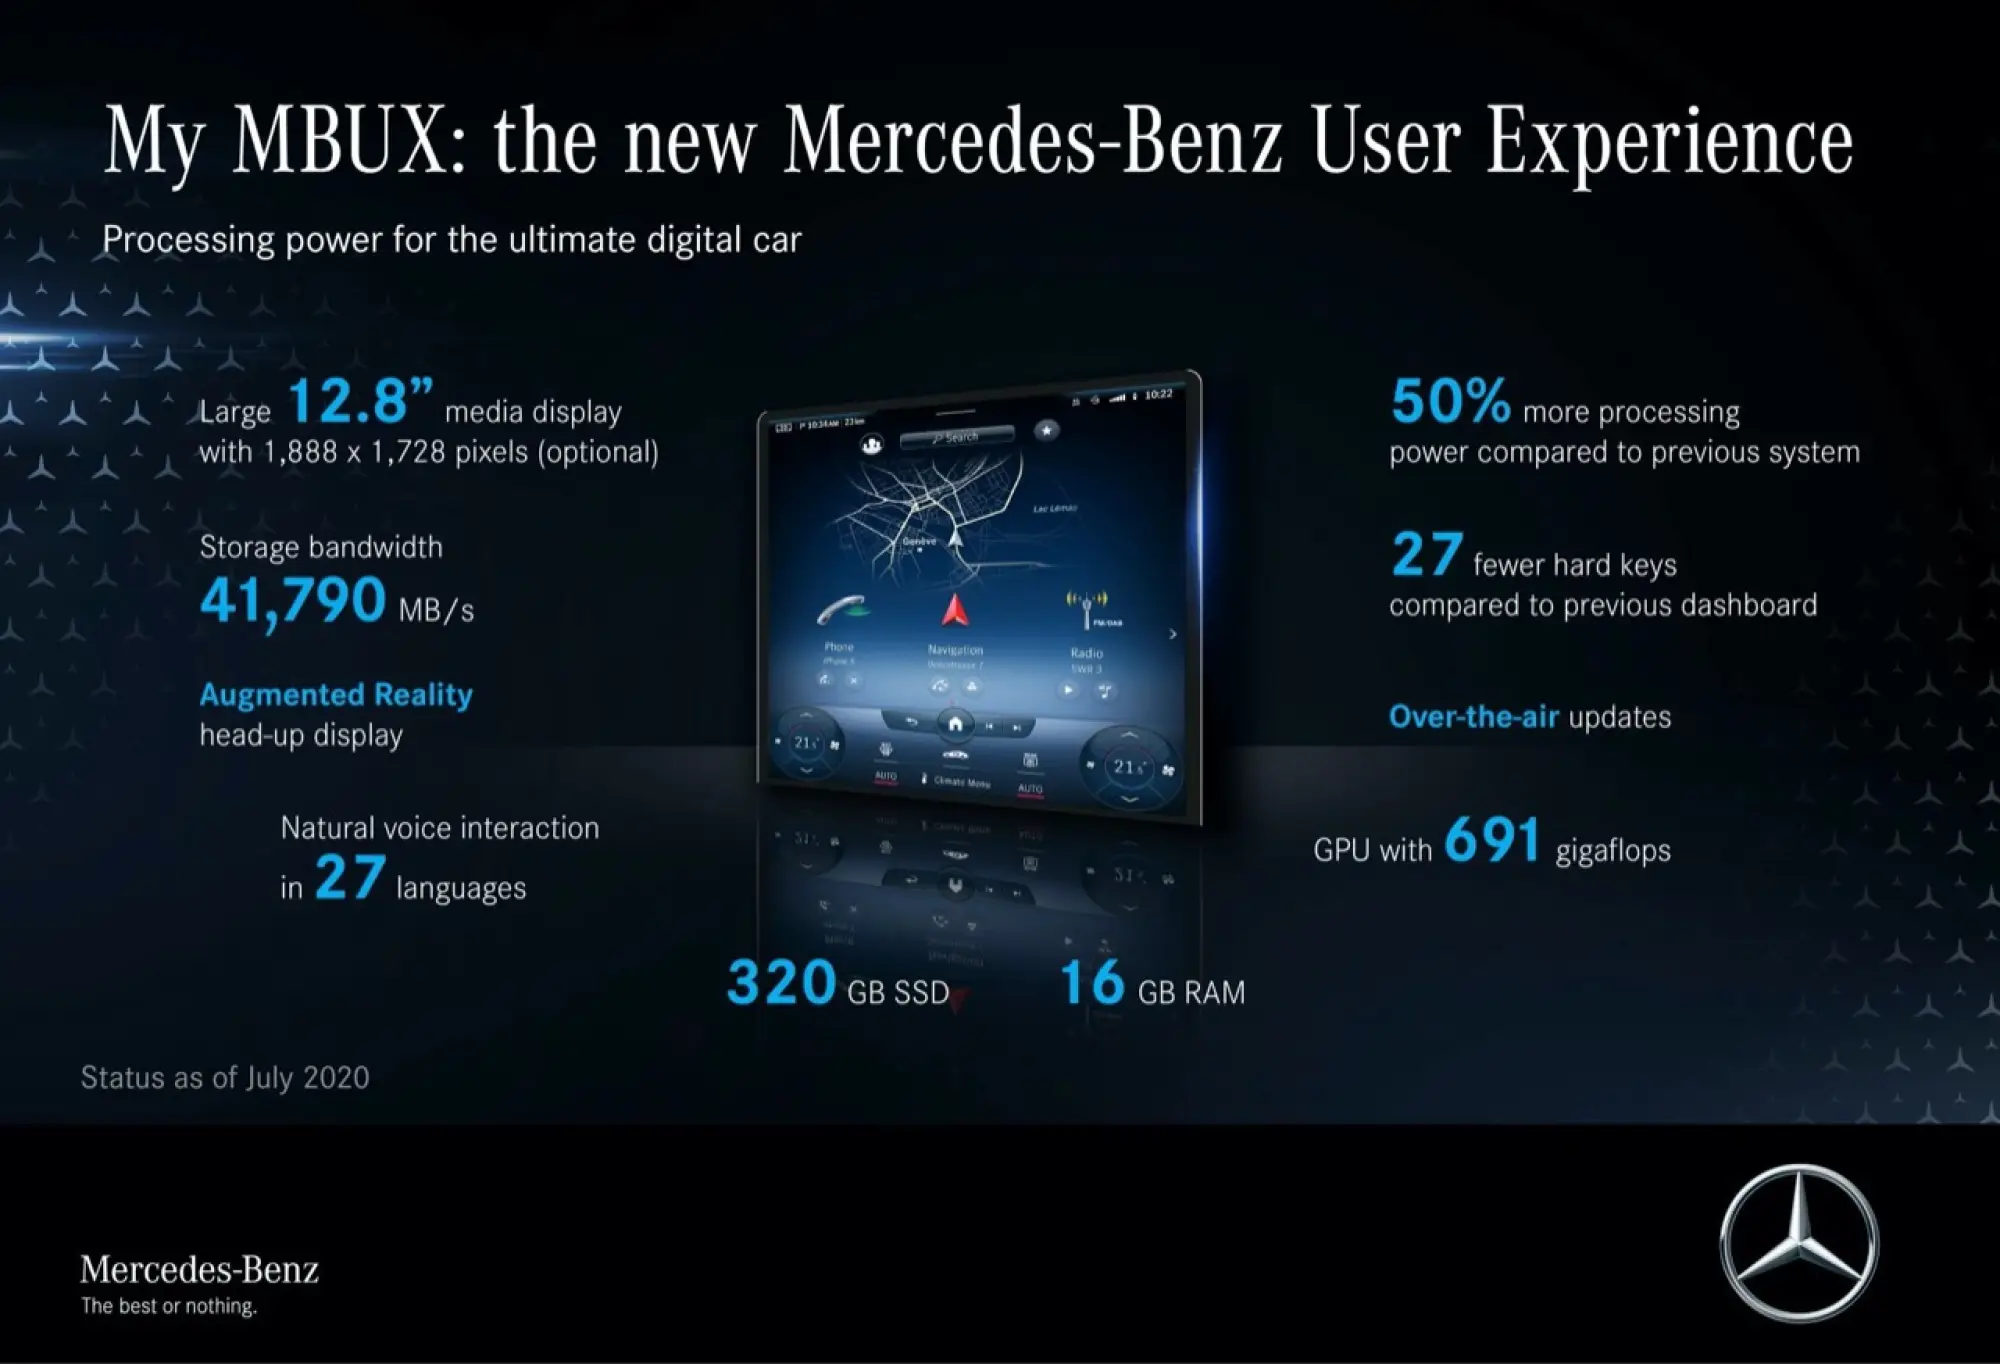 Mercedes Classe S 2021 - MBUX e interni digitali  - 7